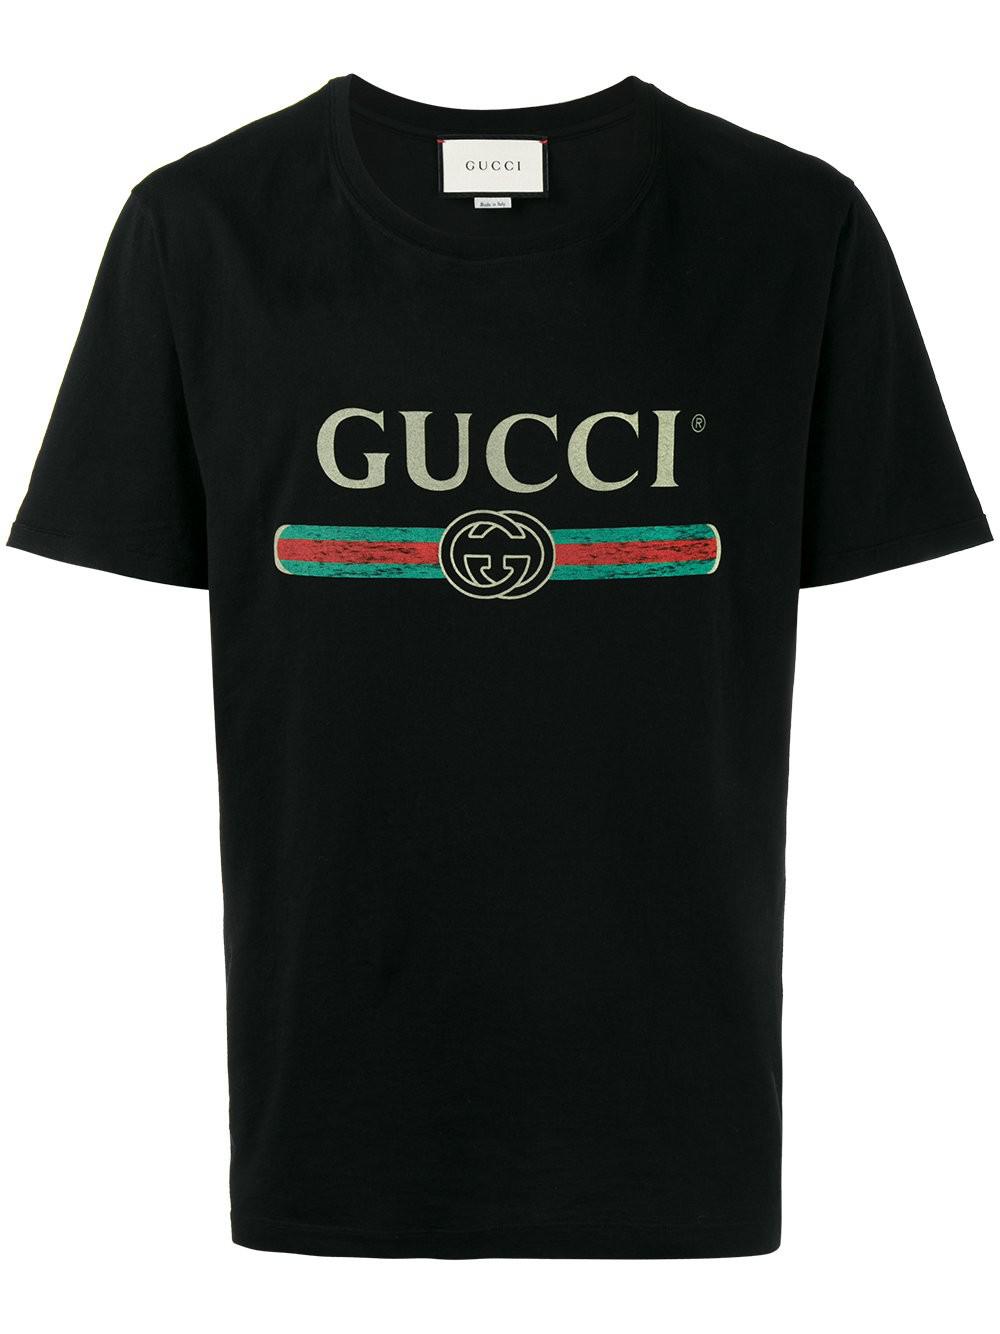 gucci shirt - OFF-65% > Shipping free